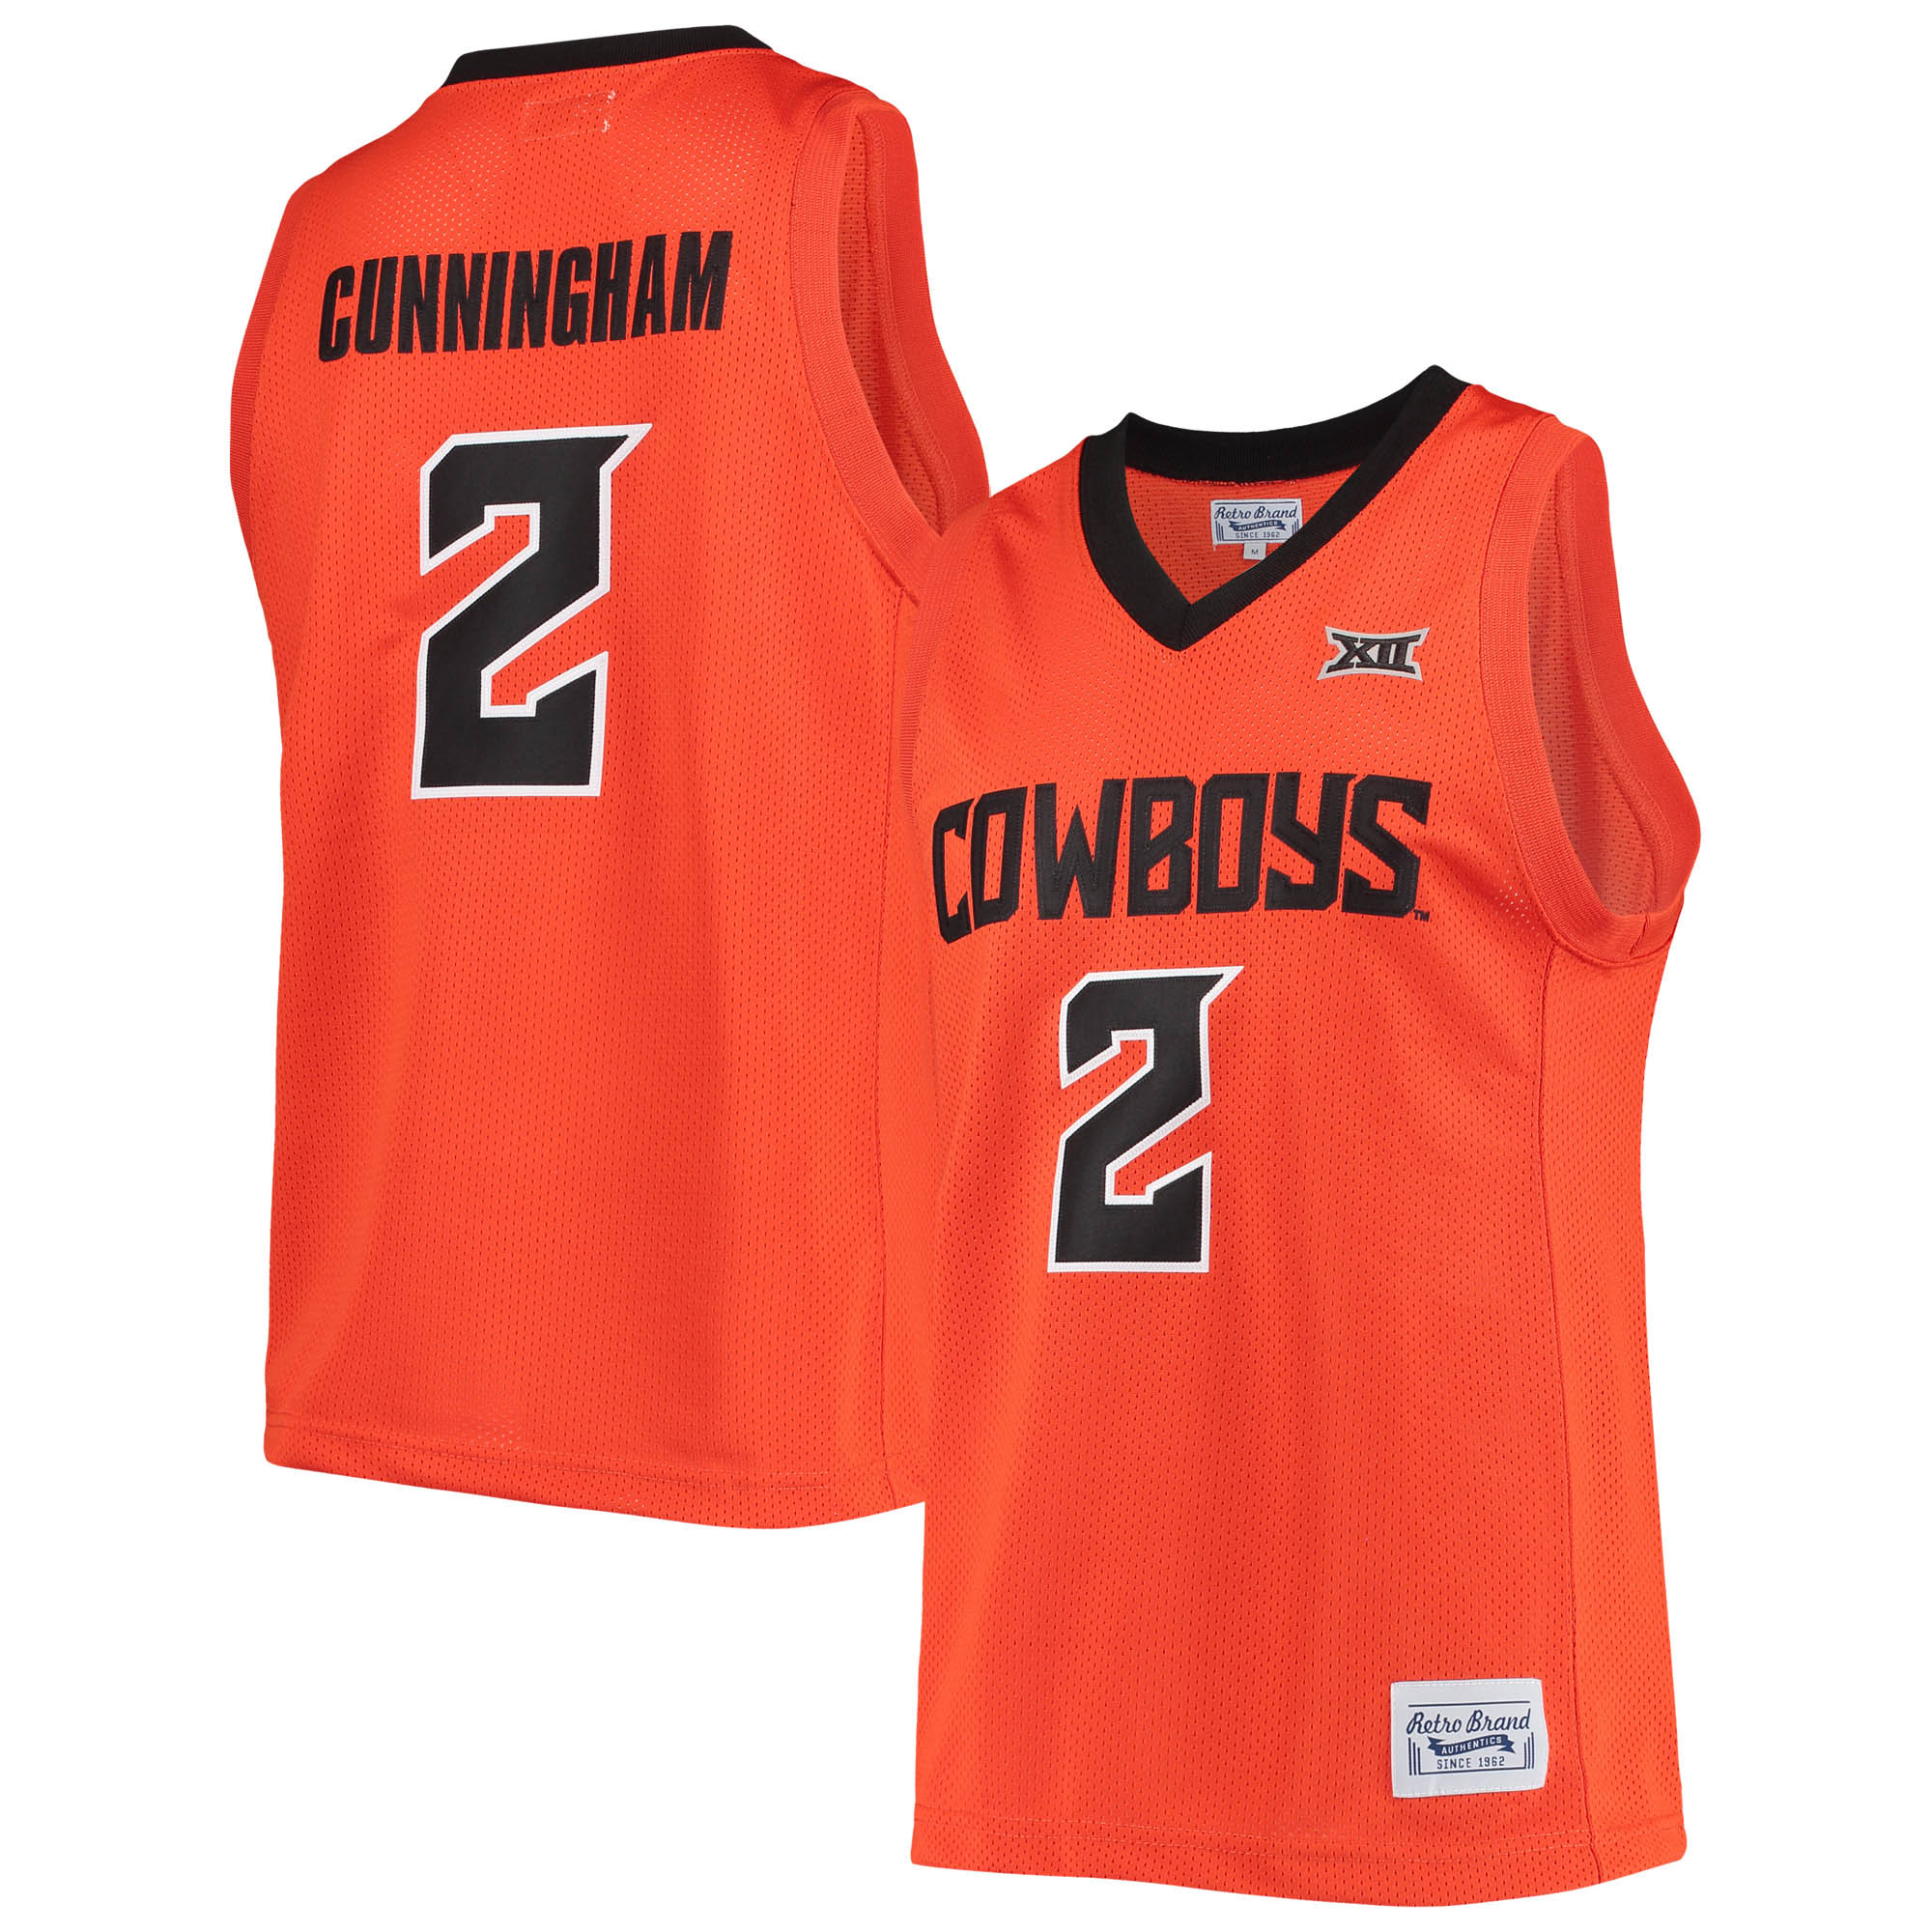 Cade Cunningham Oklahoma State Cowboys Original Retro Brand Alumni Commemorative Replica Basketball Jersey - Orange For Youth Women Men